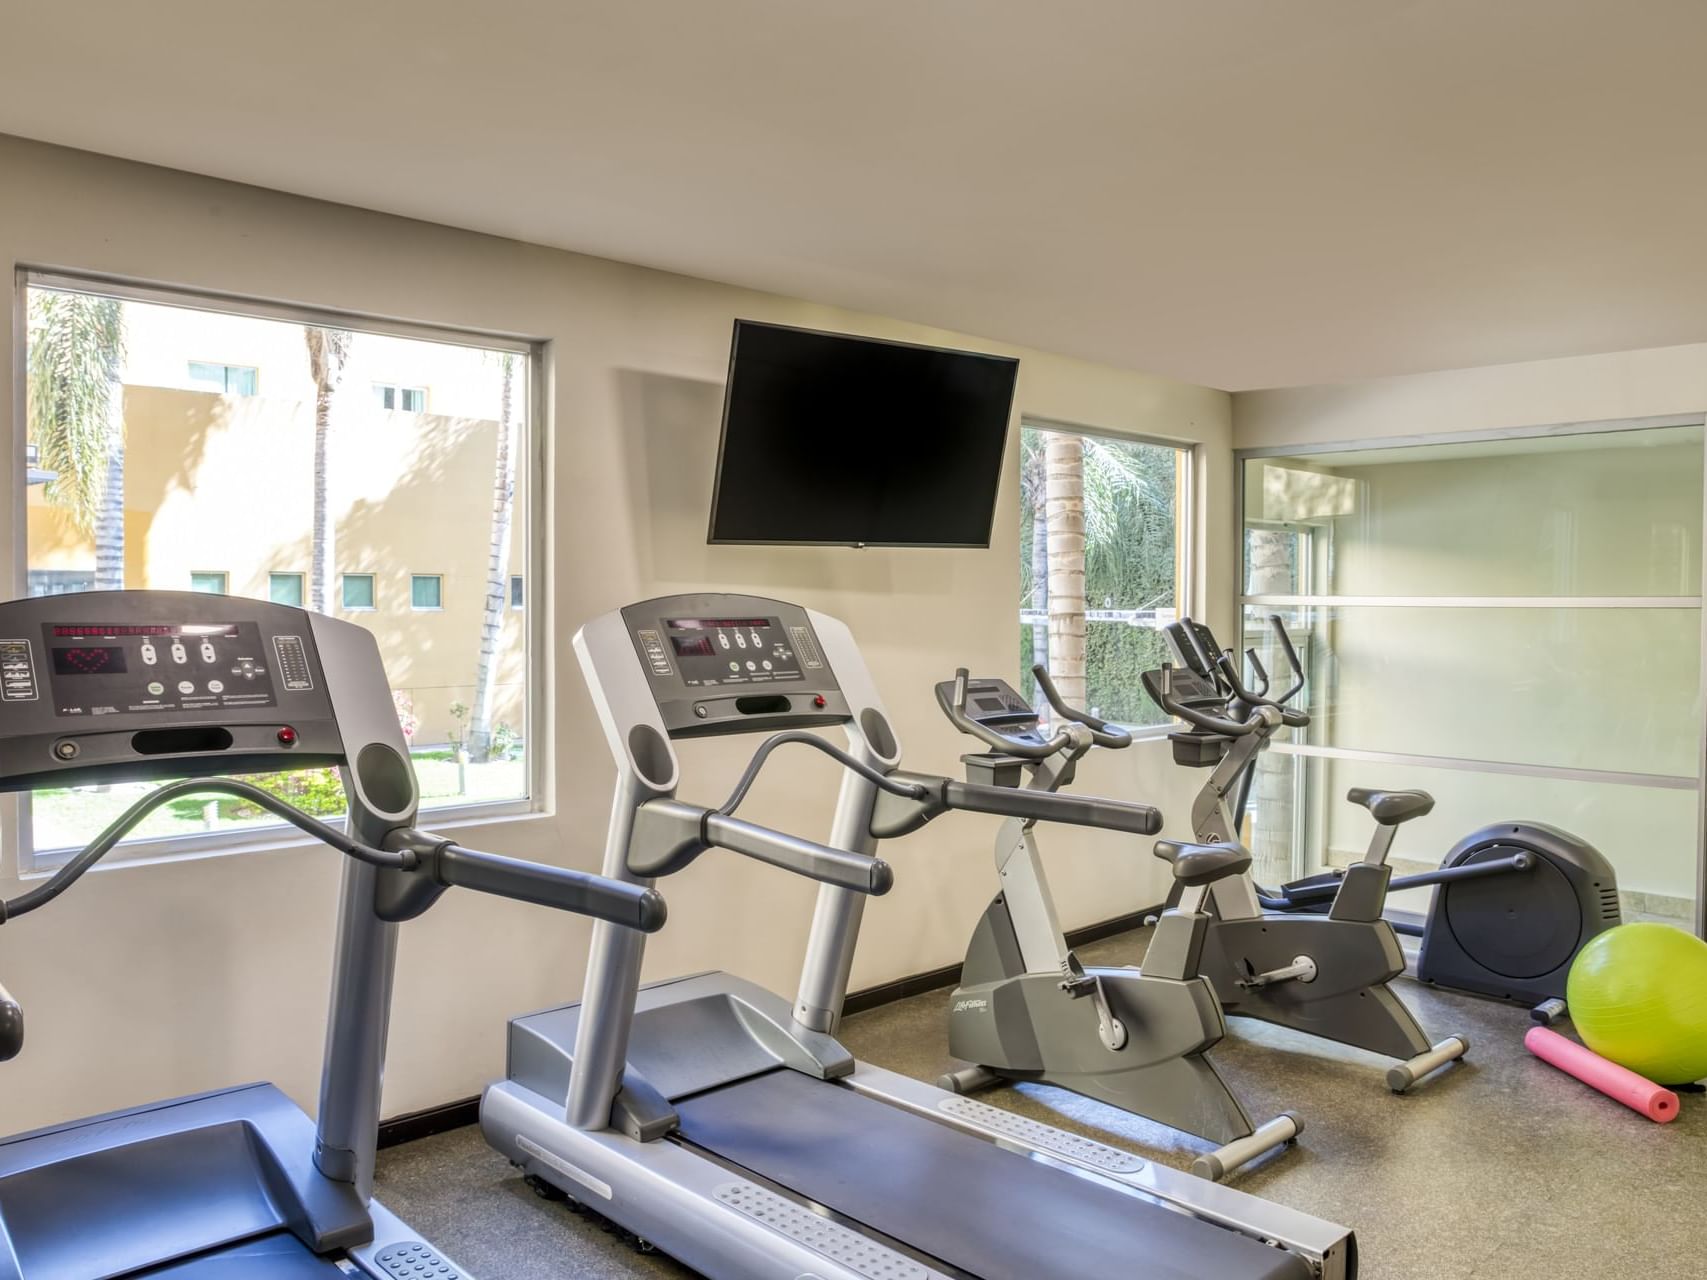 Treadmills & Tv in the Gym Wellness Center at Fiesta Inn Hotels